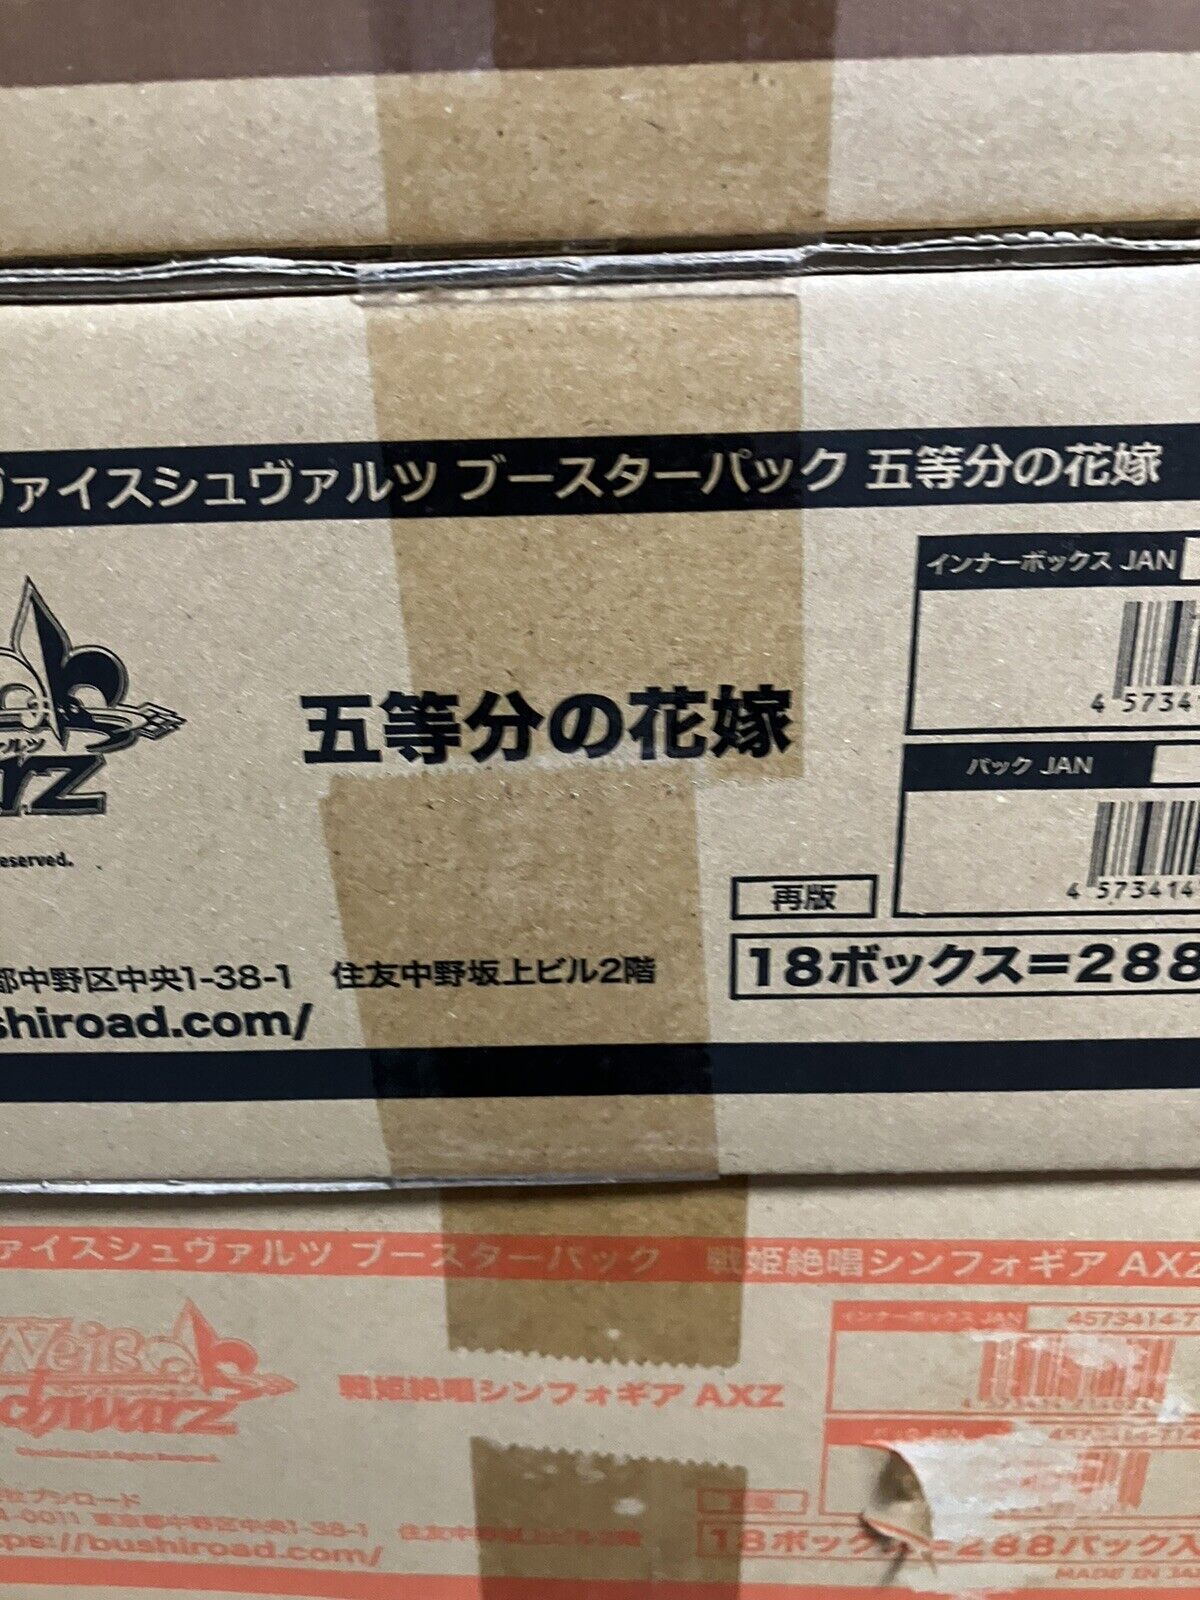 Case of Weiss Schwarz Quintessential Quintuplets Japanese Booster Box